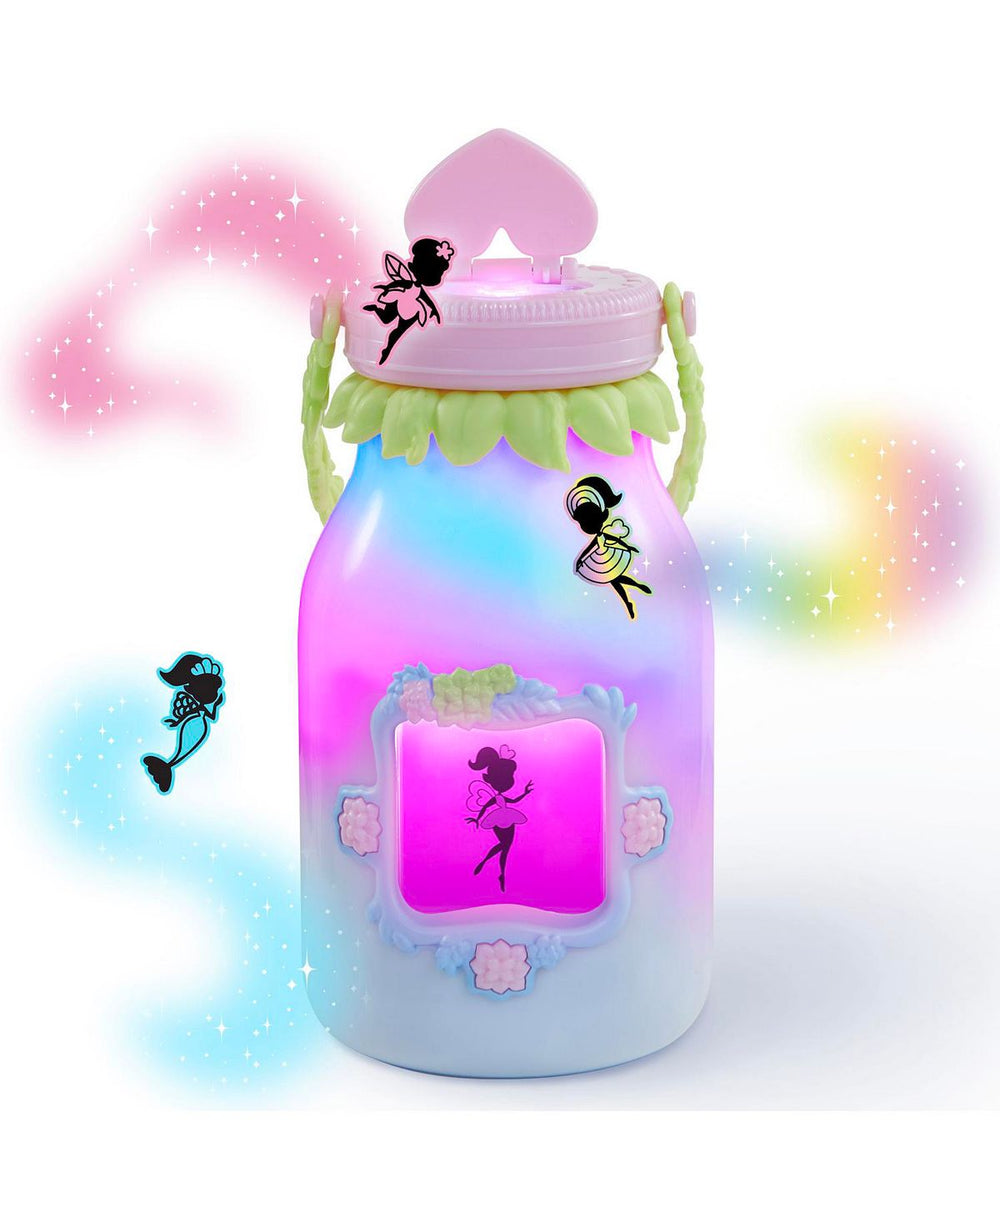 Got2Glow Fairy Finder - Interactive Pink Jar with Over 30 Fairies